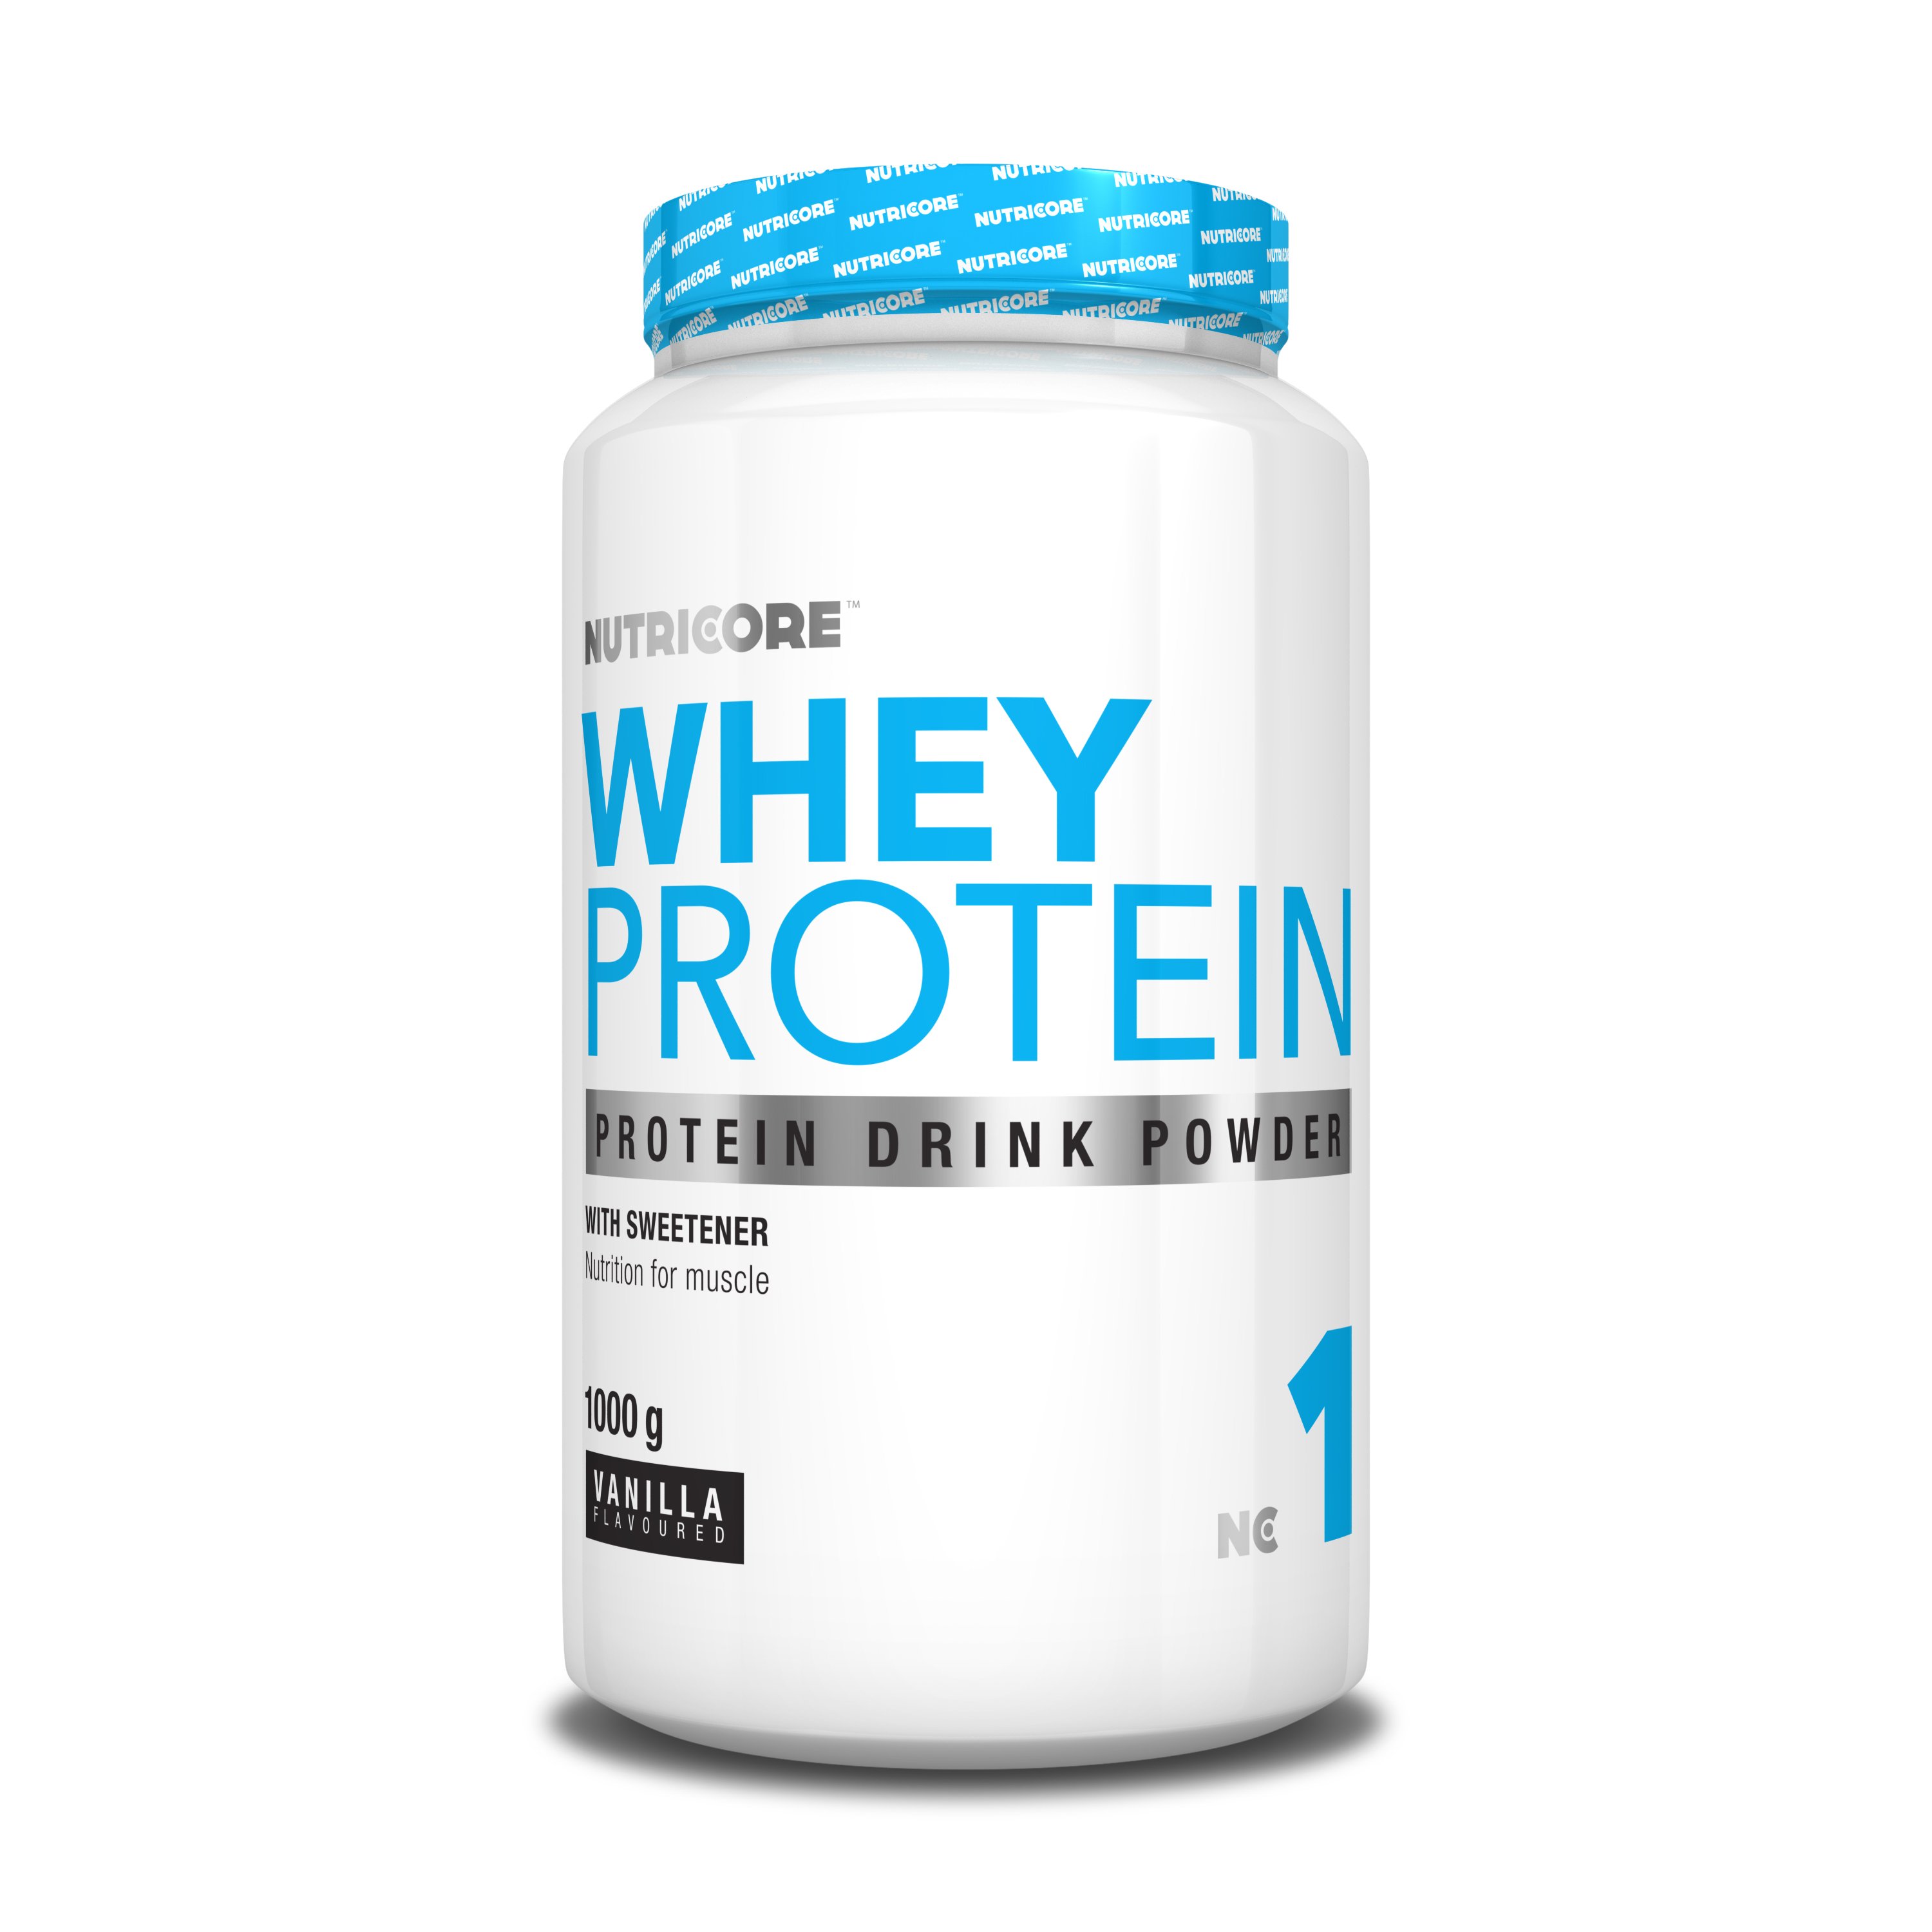 Whey Protein, 1000 g, Nutricore. Suero concentrado. Mass Gain recuperación Anti-catabolic properties 